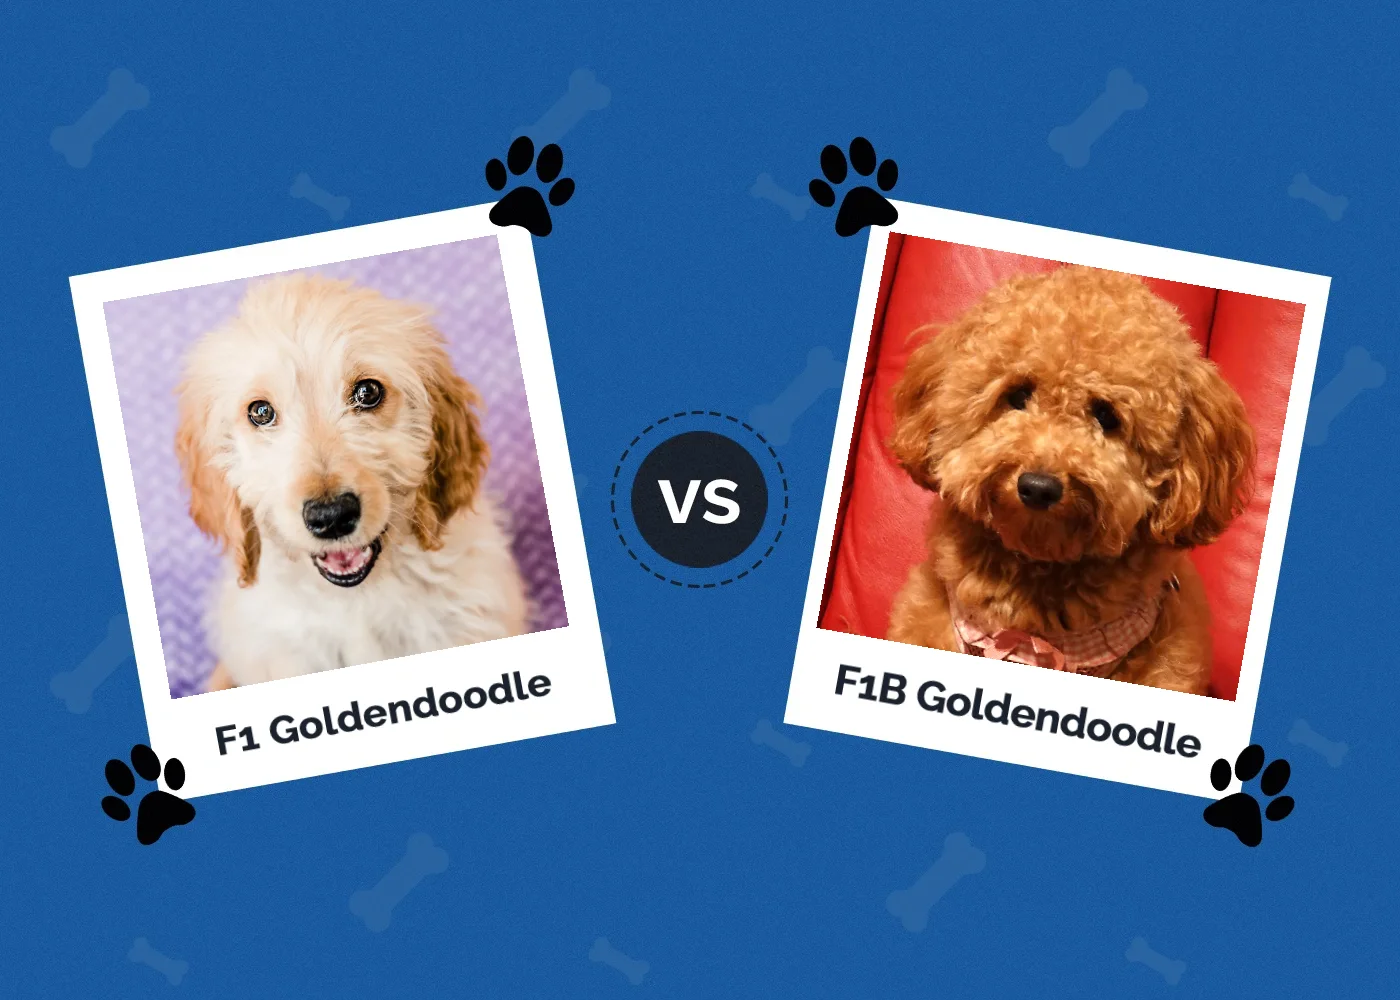 F1 Goldendoodle vs F1B Goldendoodle - Featured Image